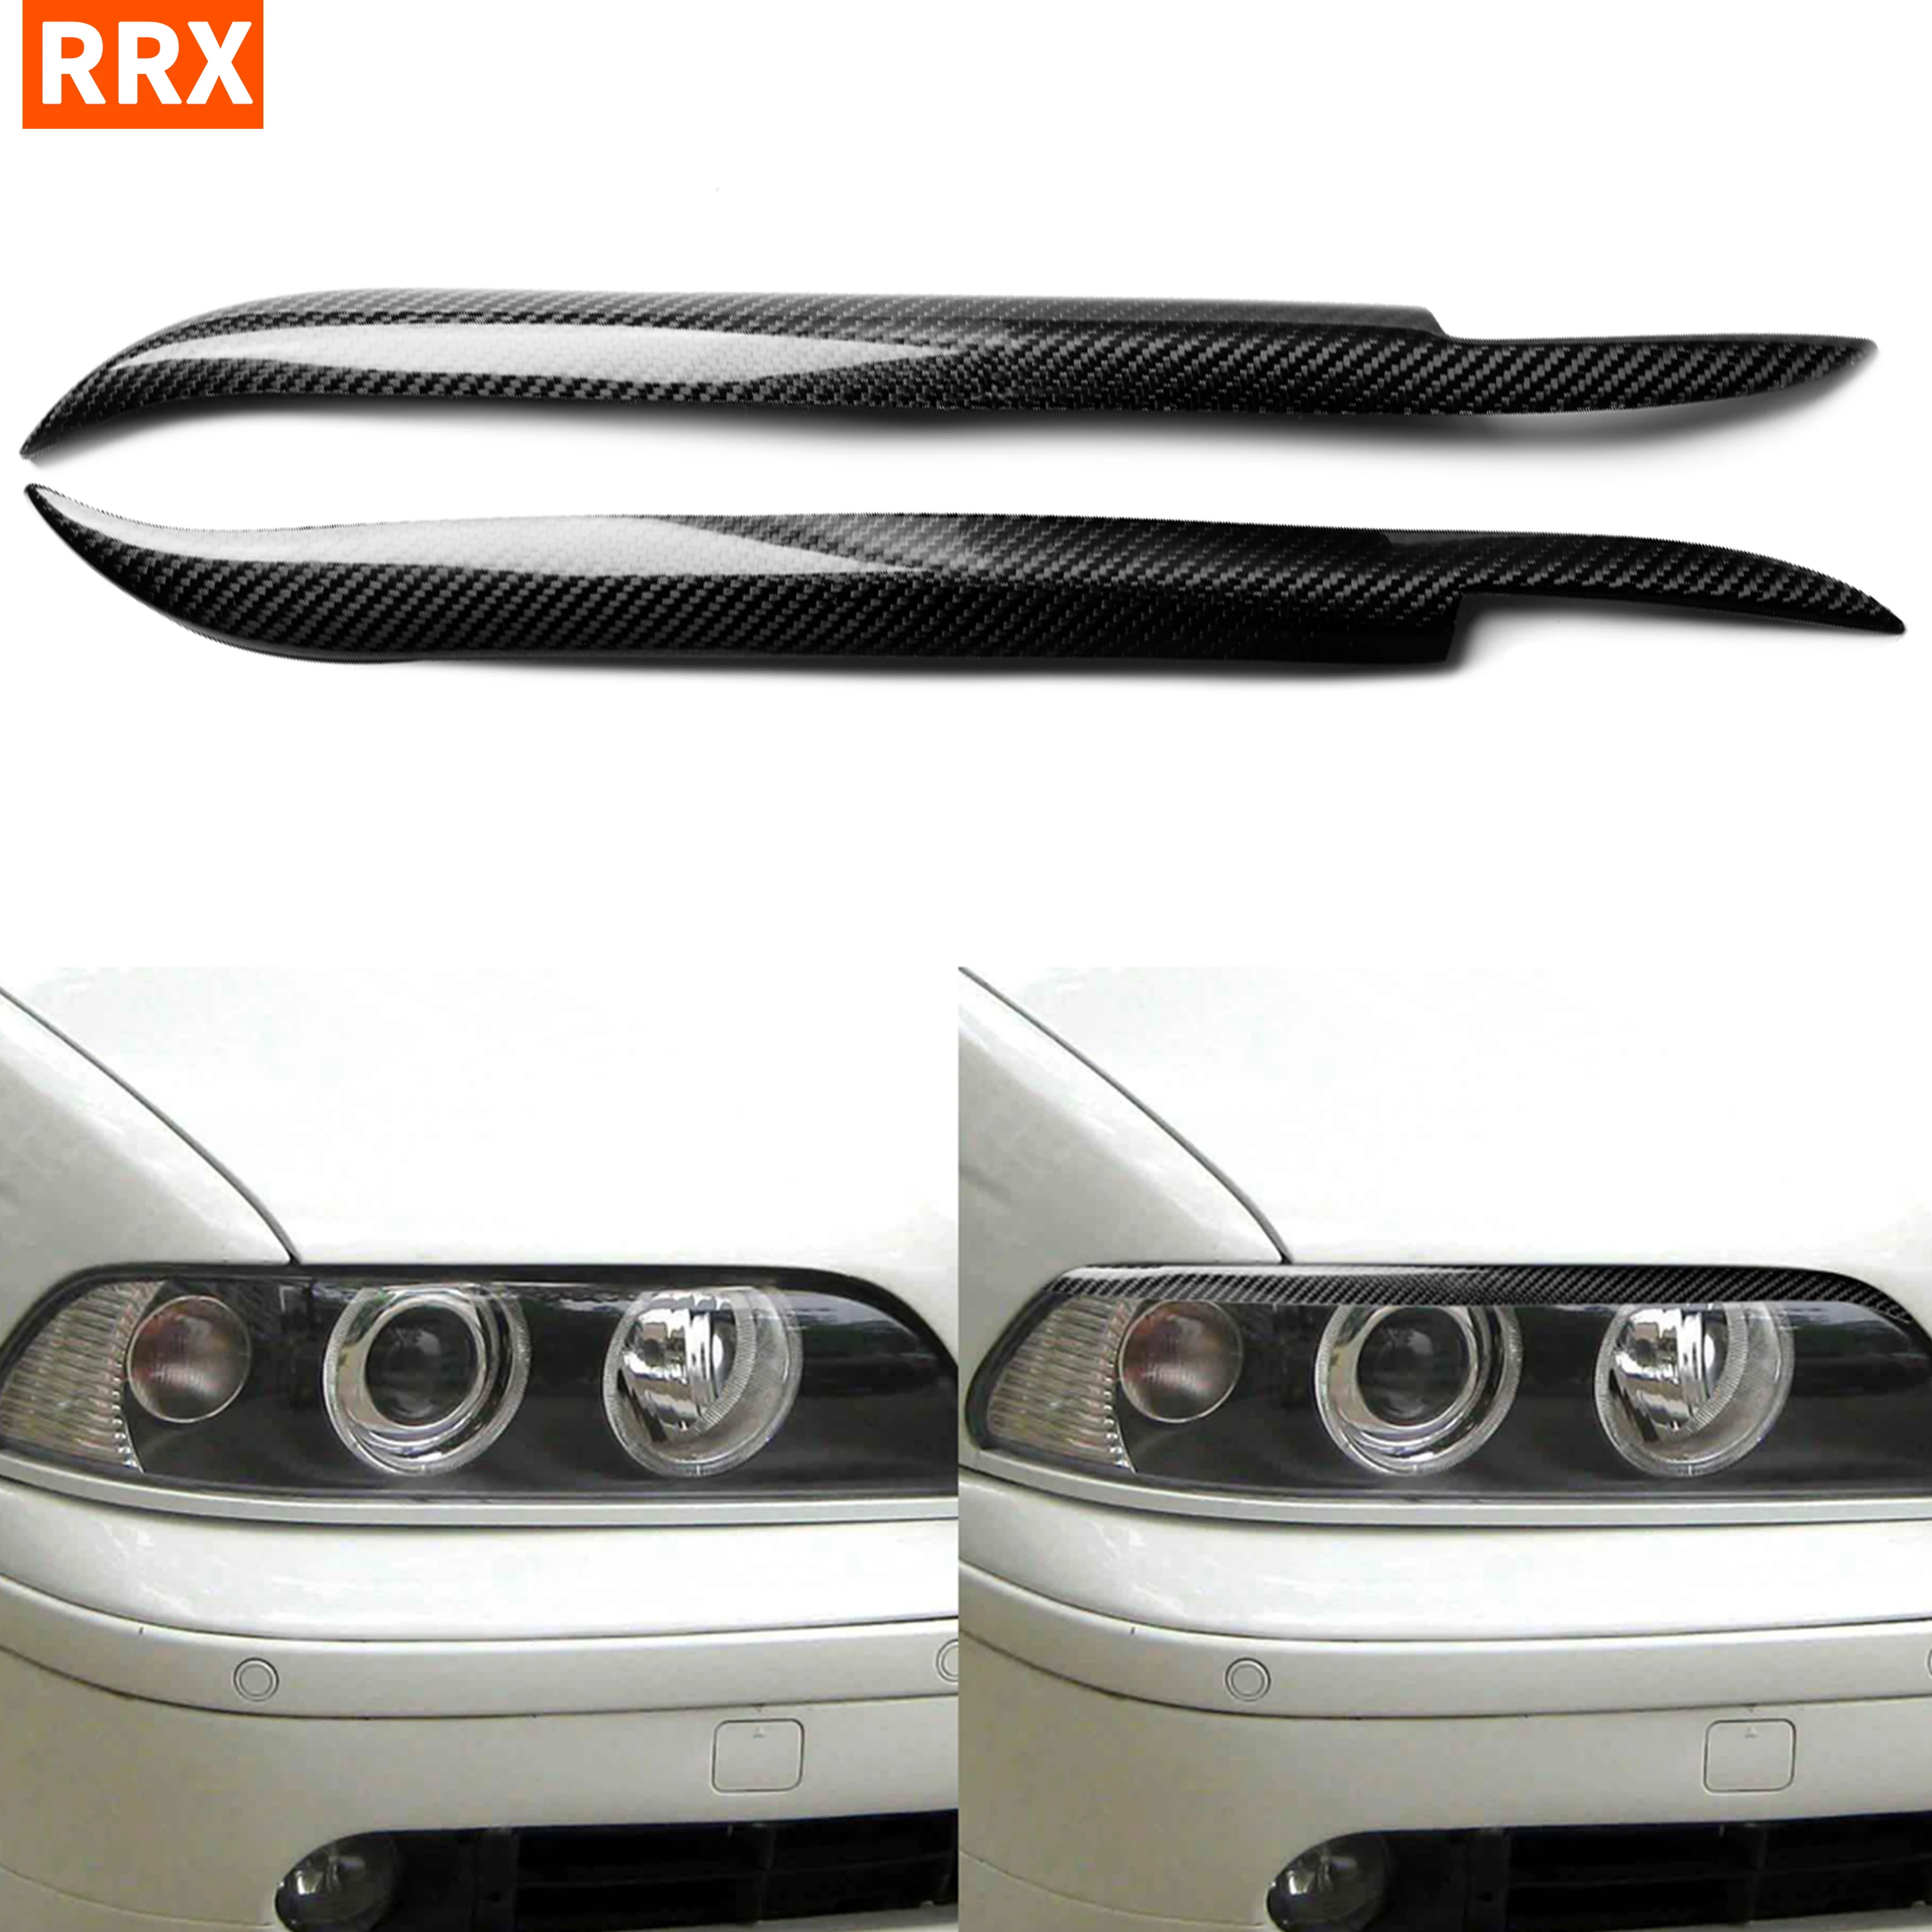 

For BMW E39 1997-2003 Real Carbon Fiber Headlight Eyebrow Cover Sticker Head Light Lamp Eyelid Overlays Trim Auto Car styling